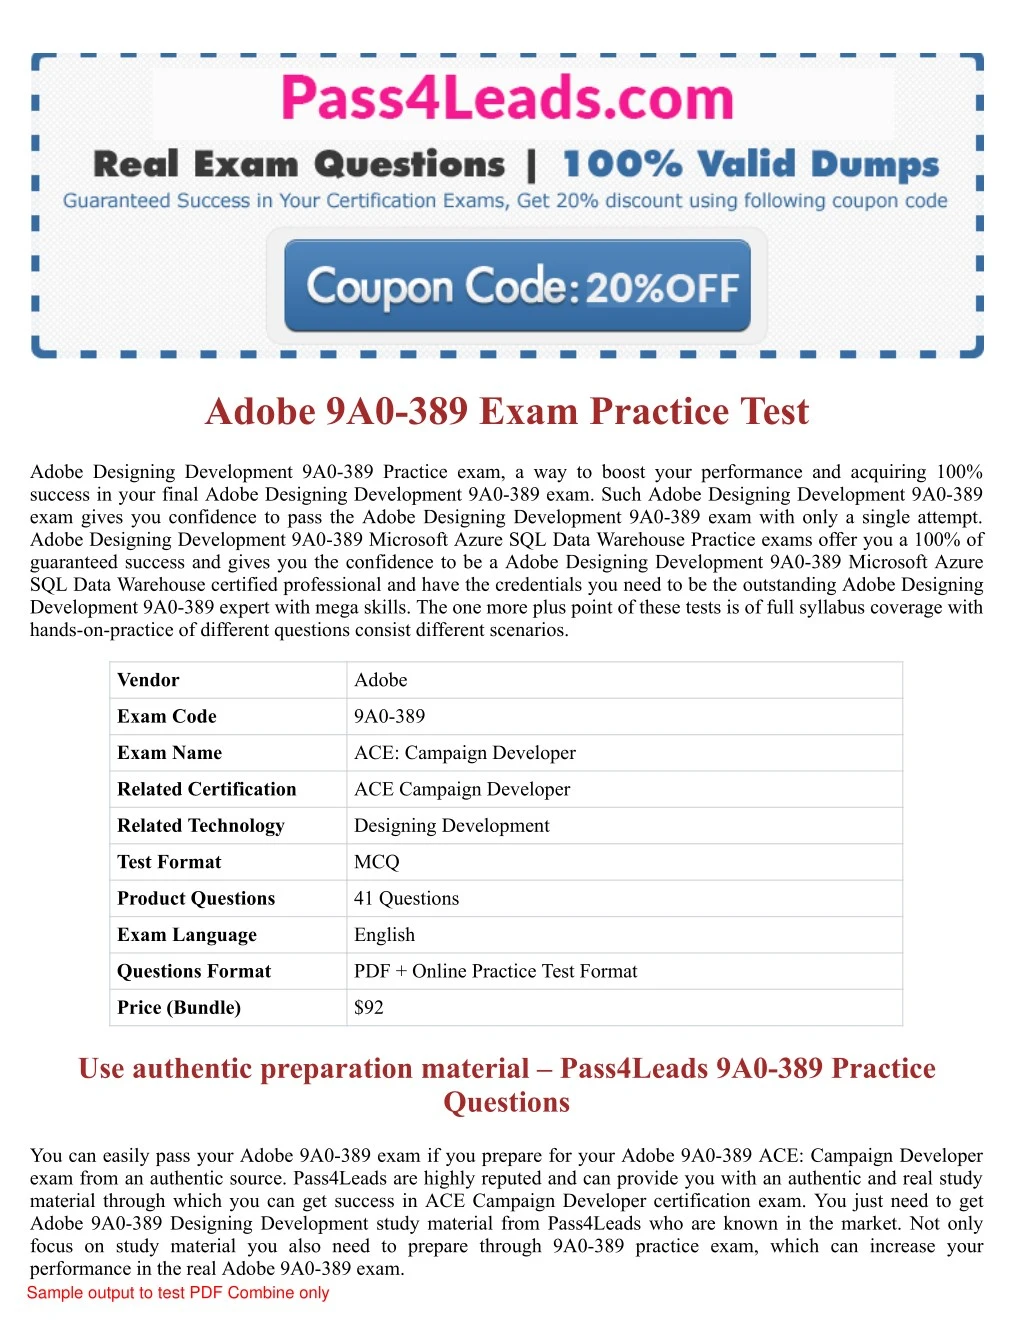 adobe 9a0 389 exam practice test